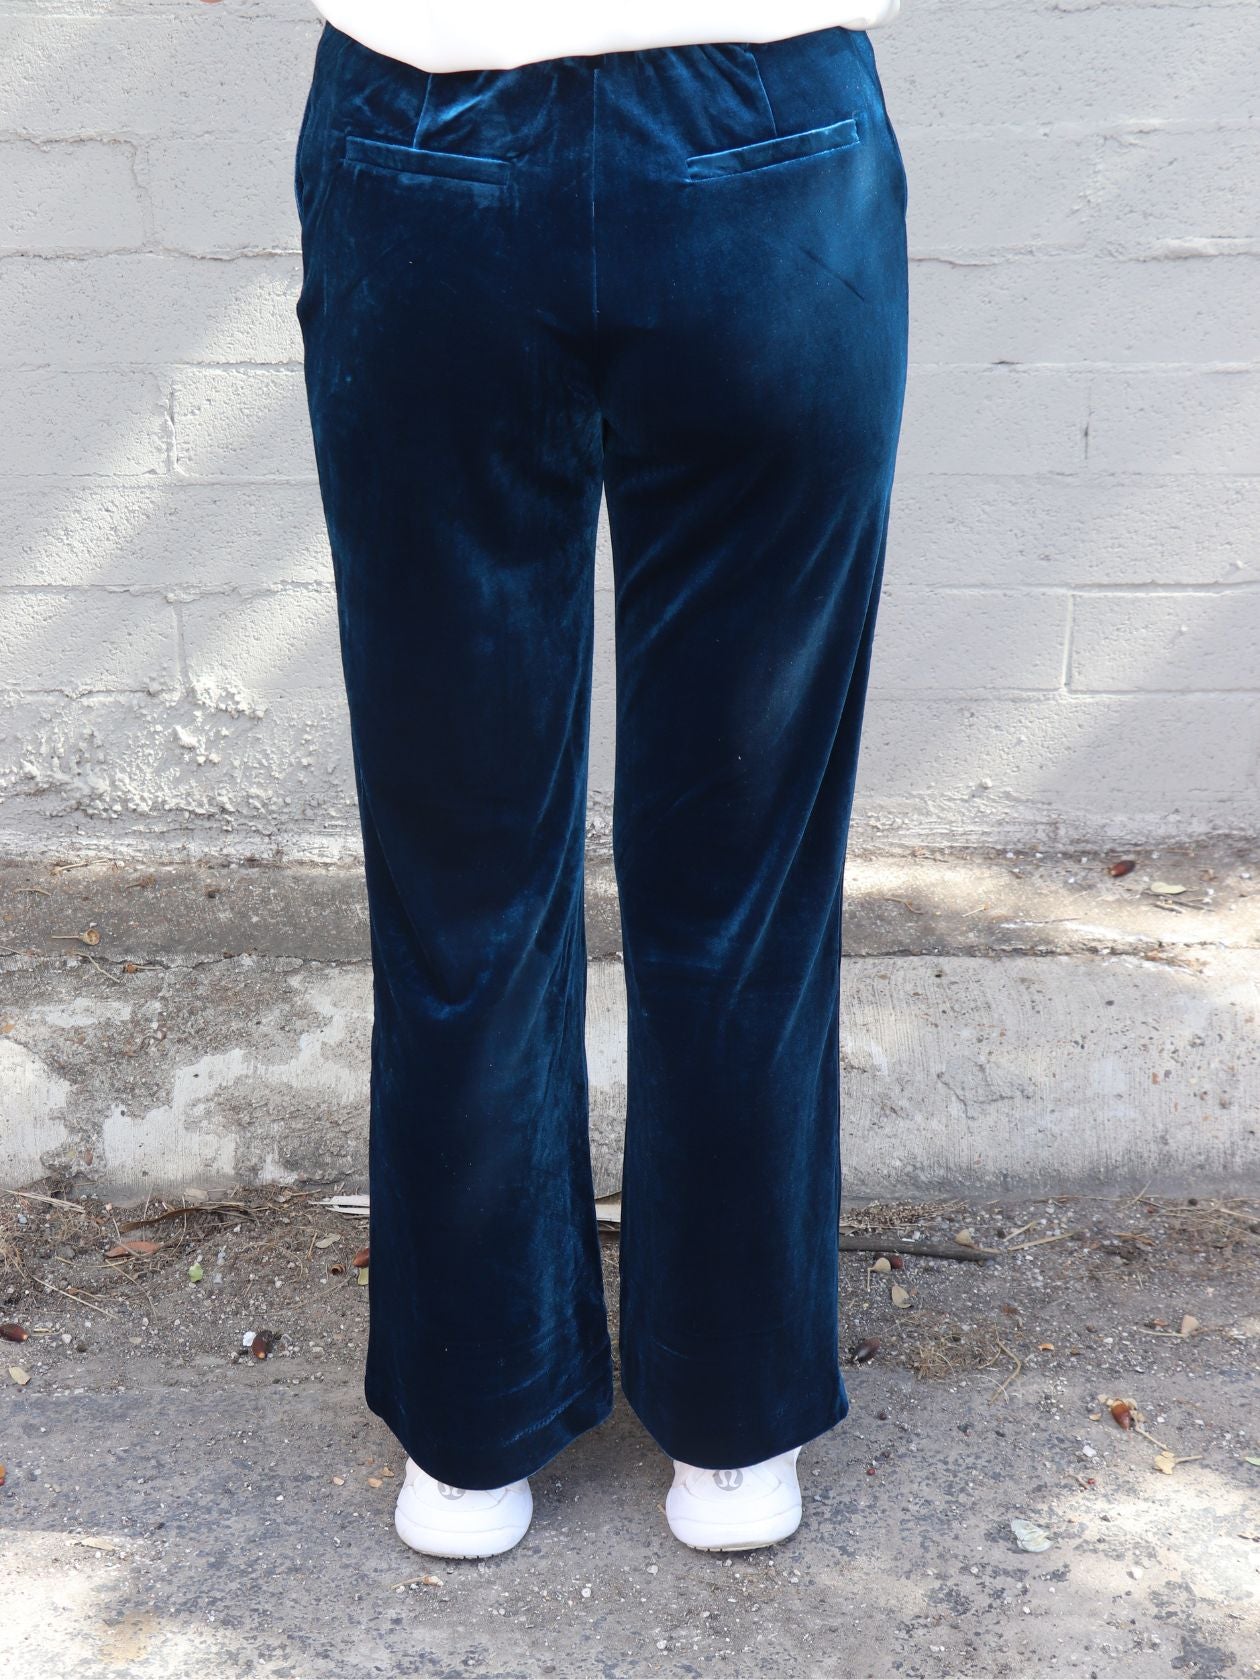 Zara | Pants & Jumpsuits | Zara New Wrinkled Effect Velvet Pants S Gorgeous  Rich Teal | Poshmark